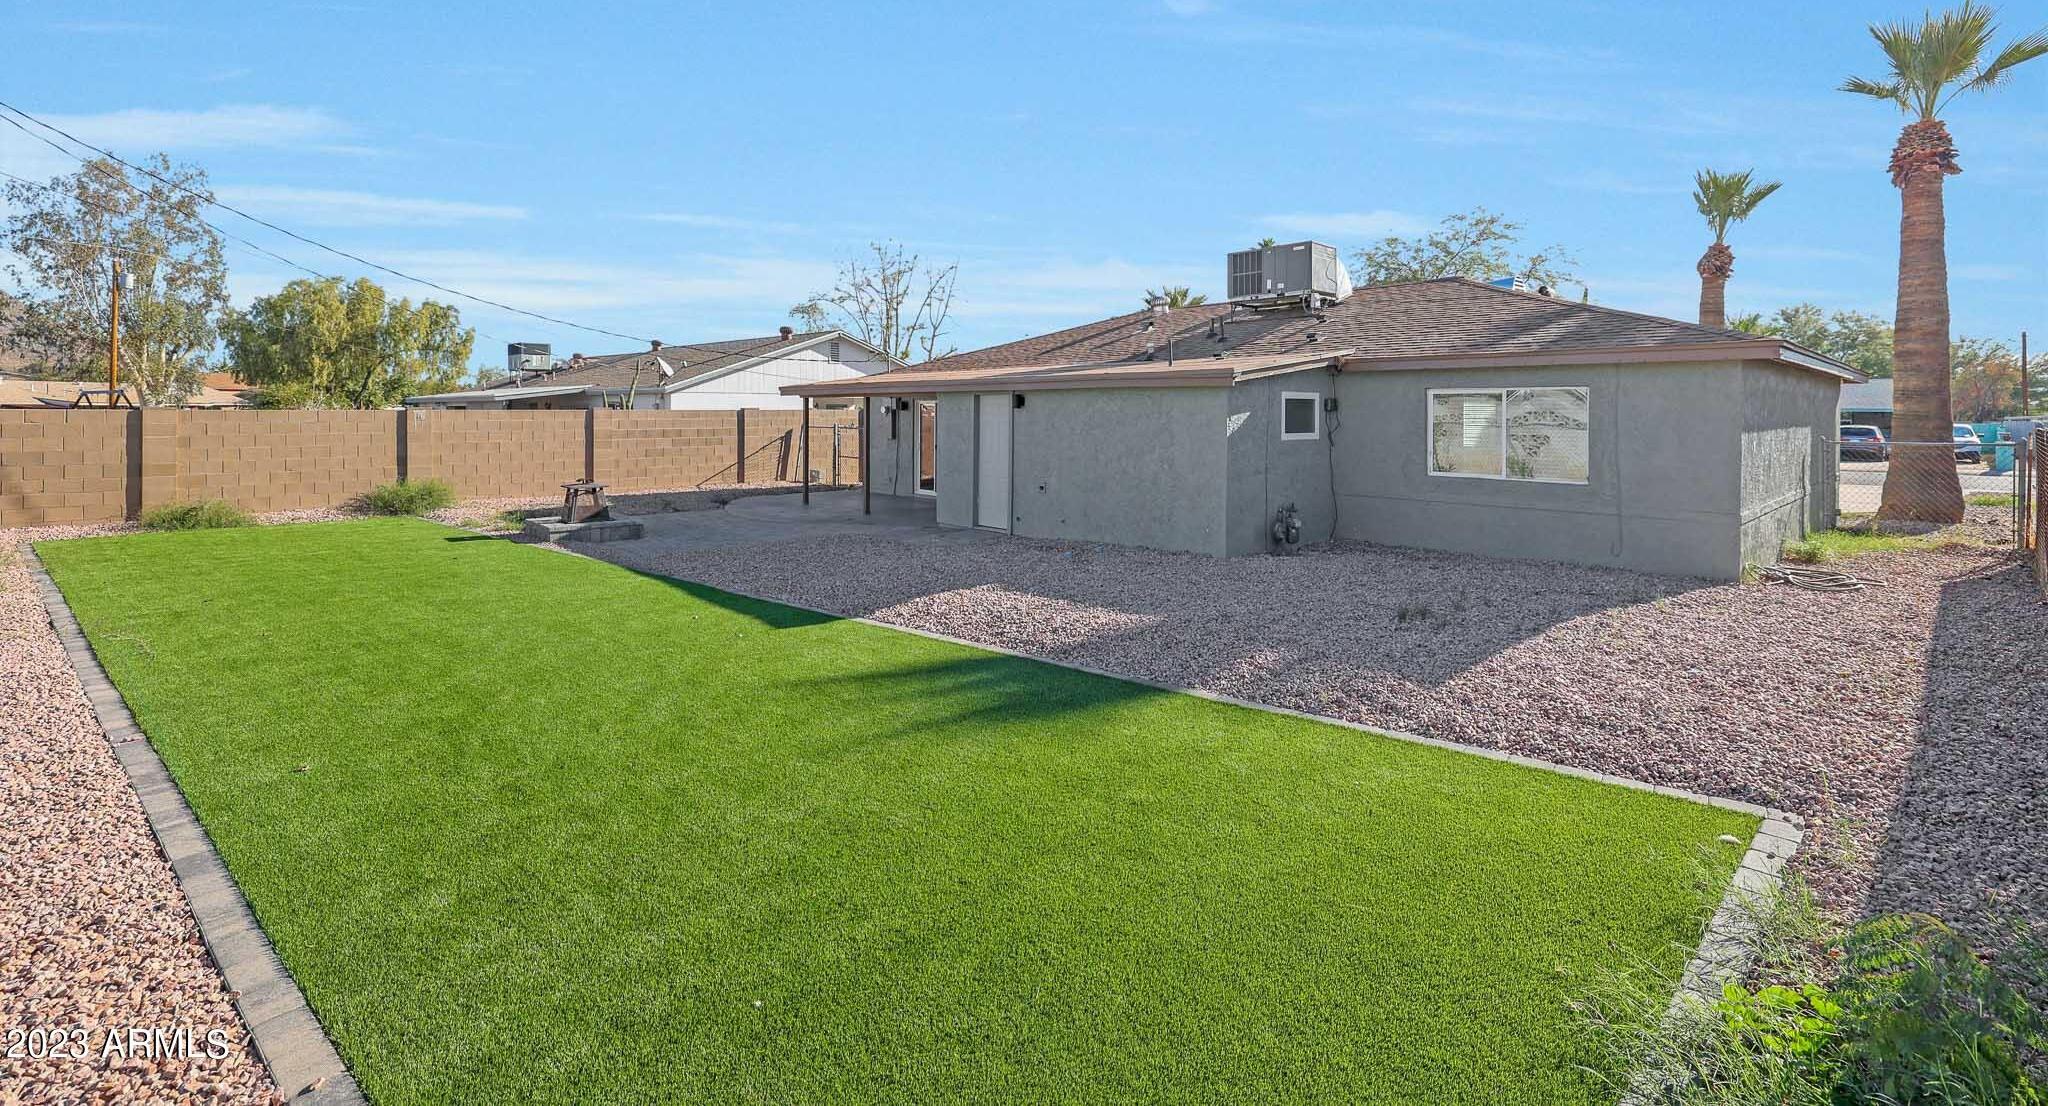 Villas At Trellis Phoenix Arizona Homes For Sale